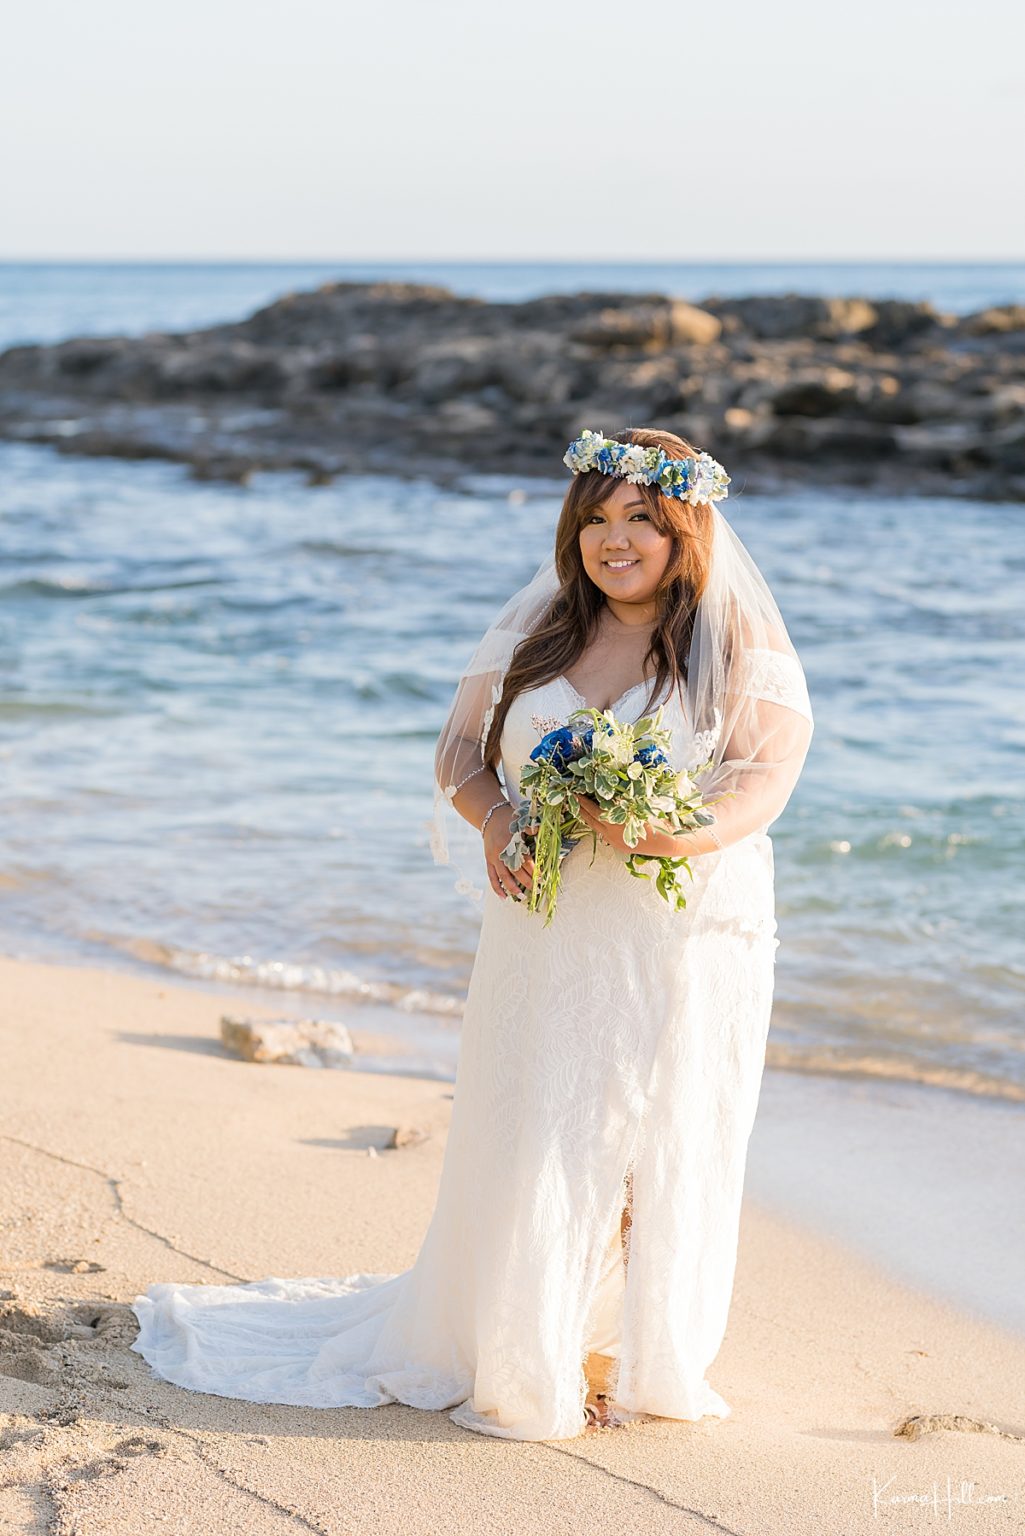 Maximum Sweetness - Angie & Montana's Oahu Beach Wedding